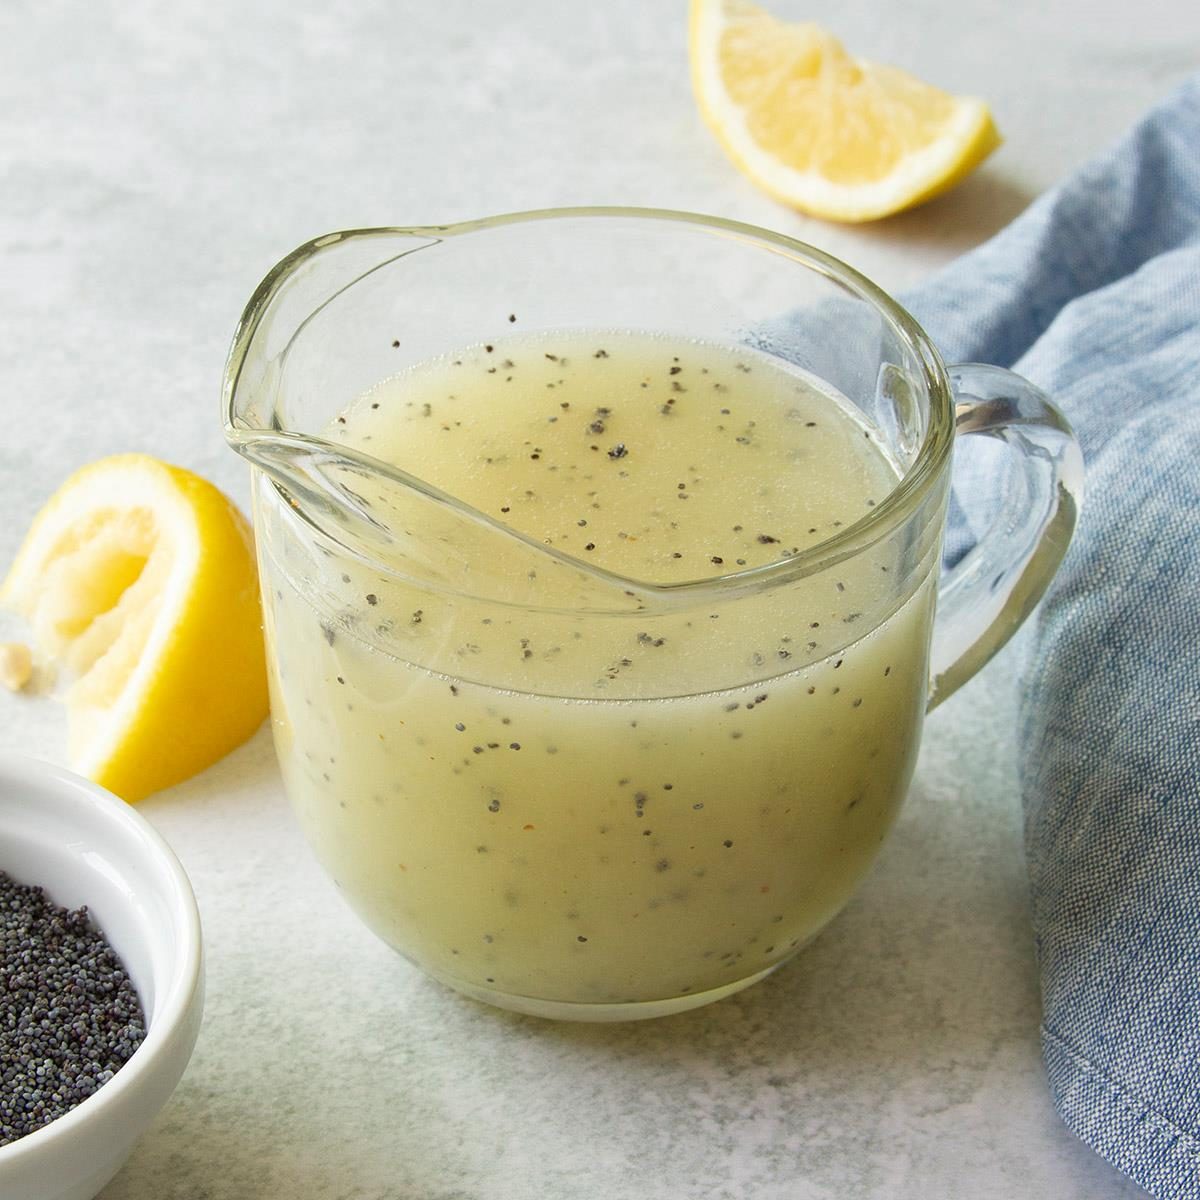 Lemon Poppy Seed Dressing Recipe: How to Make It